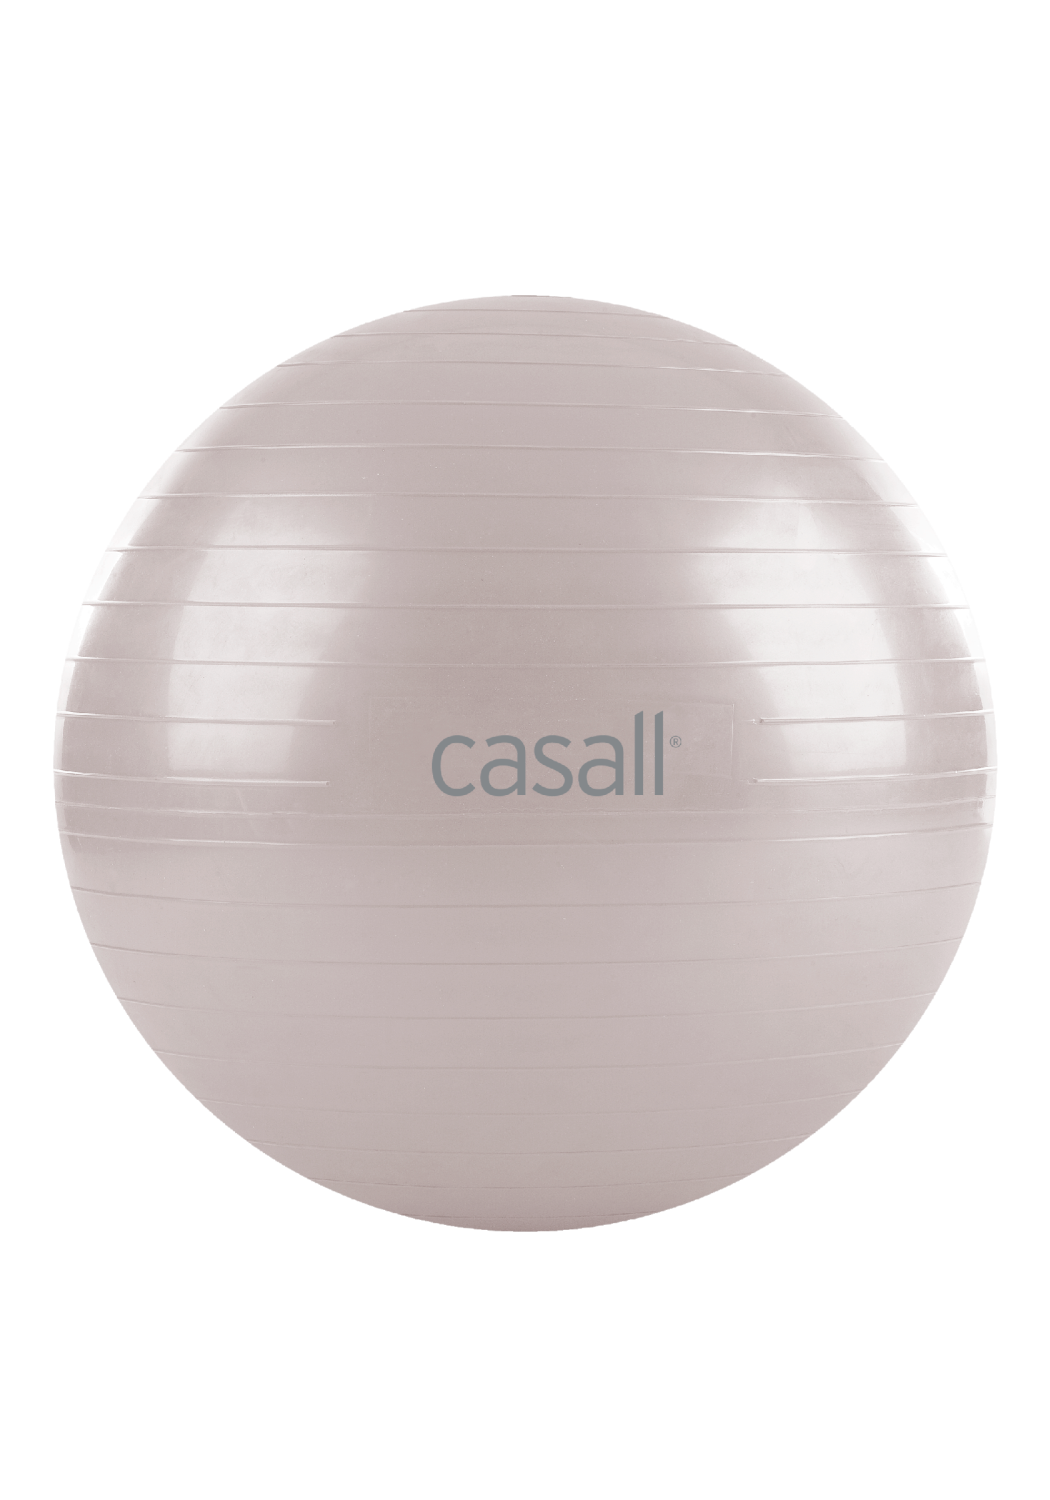 Casall  Gym ball 60-65 cm